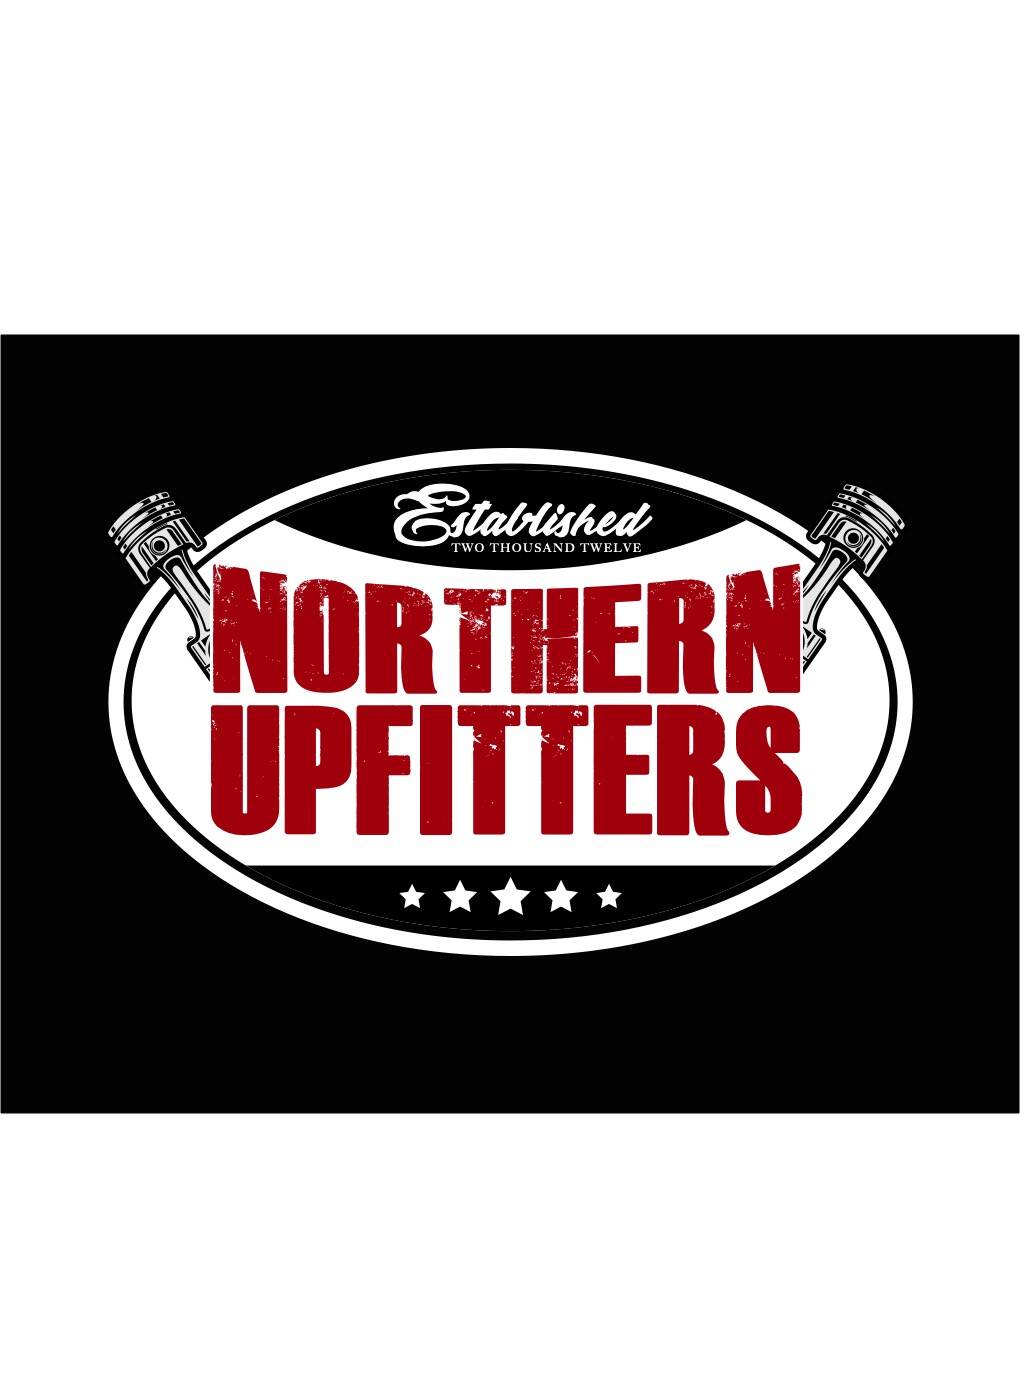 Northern Upfitters